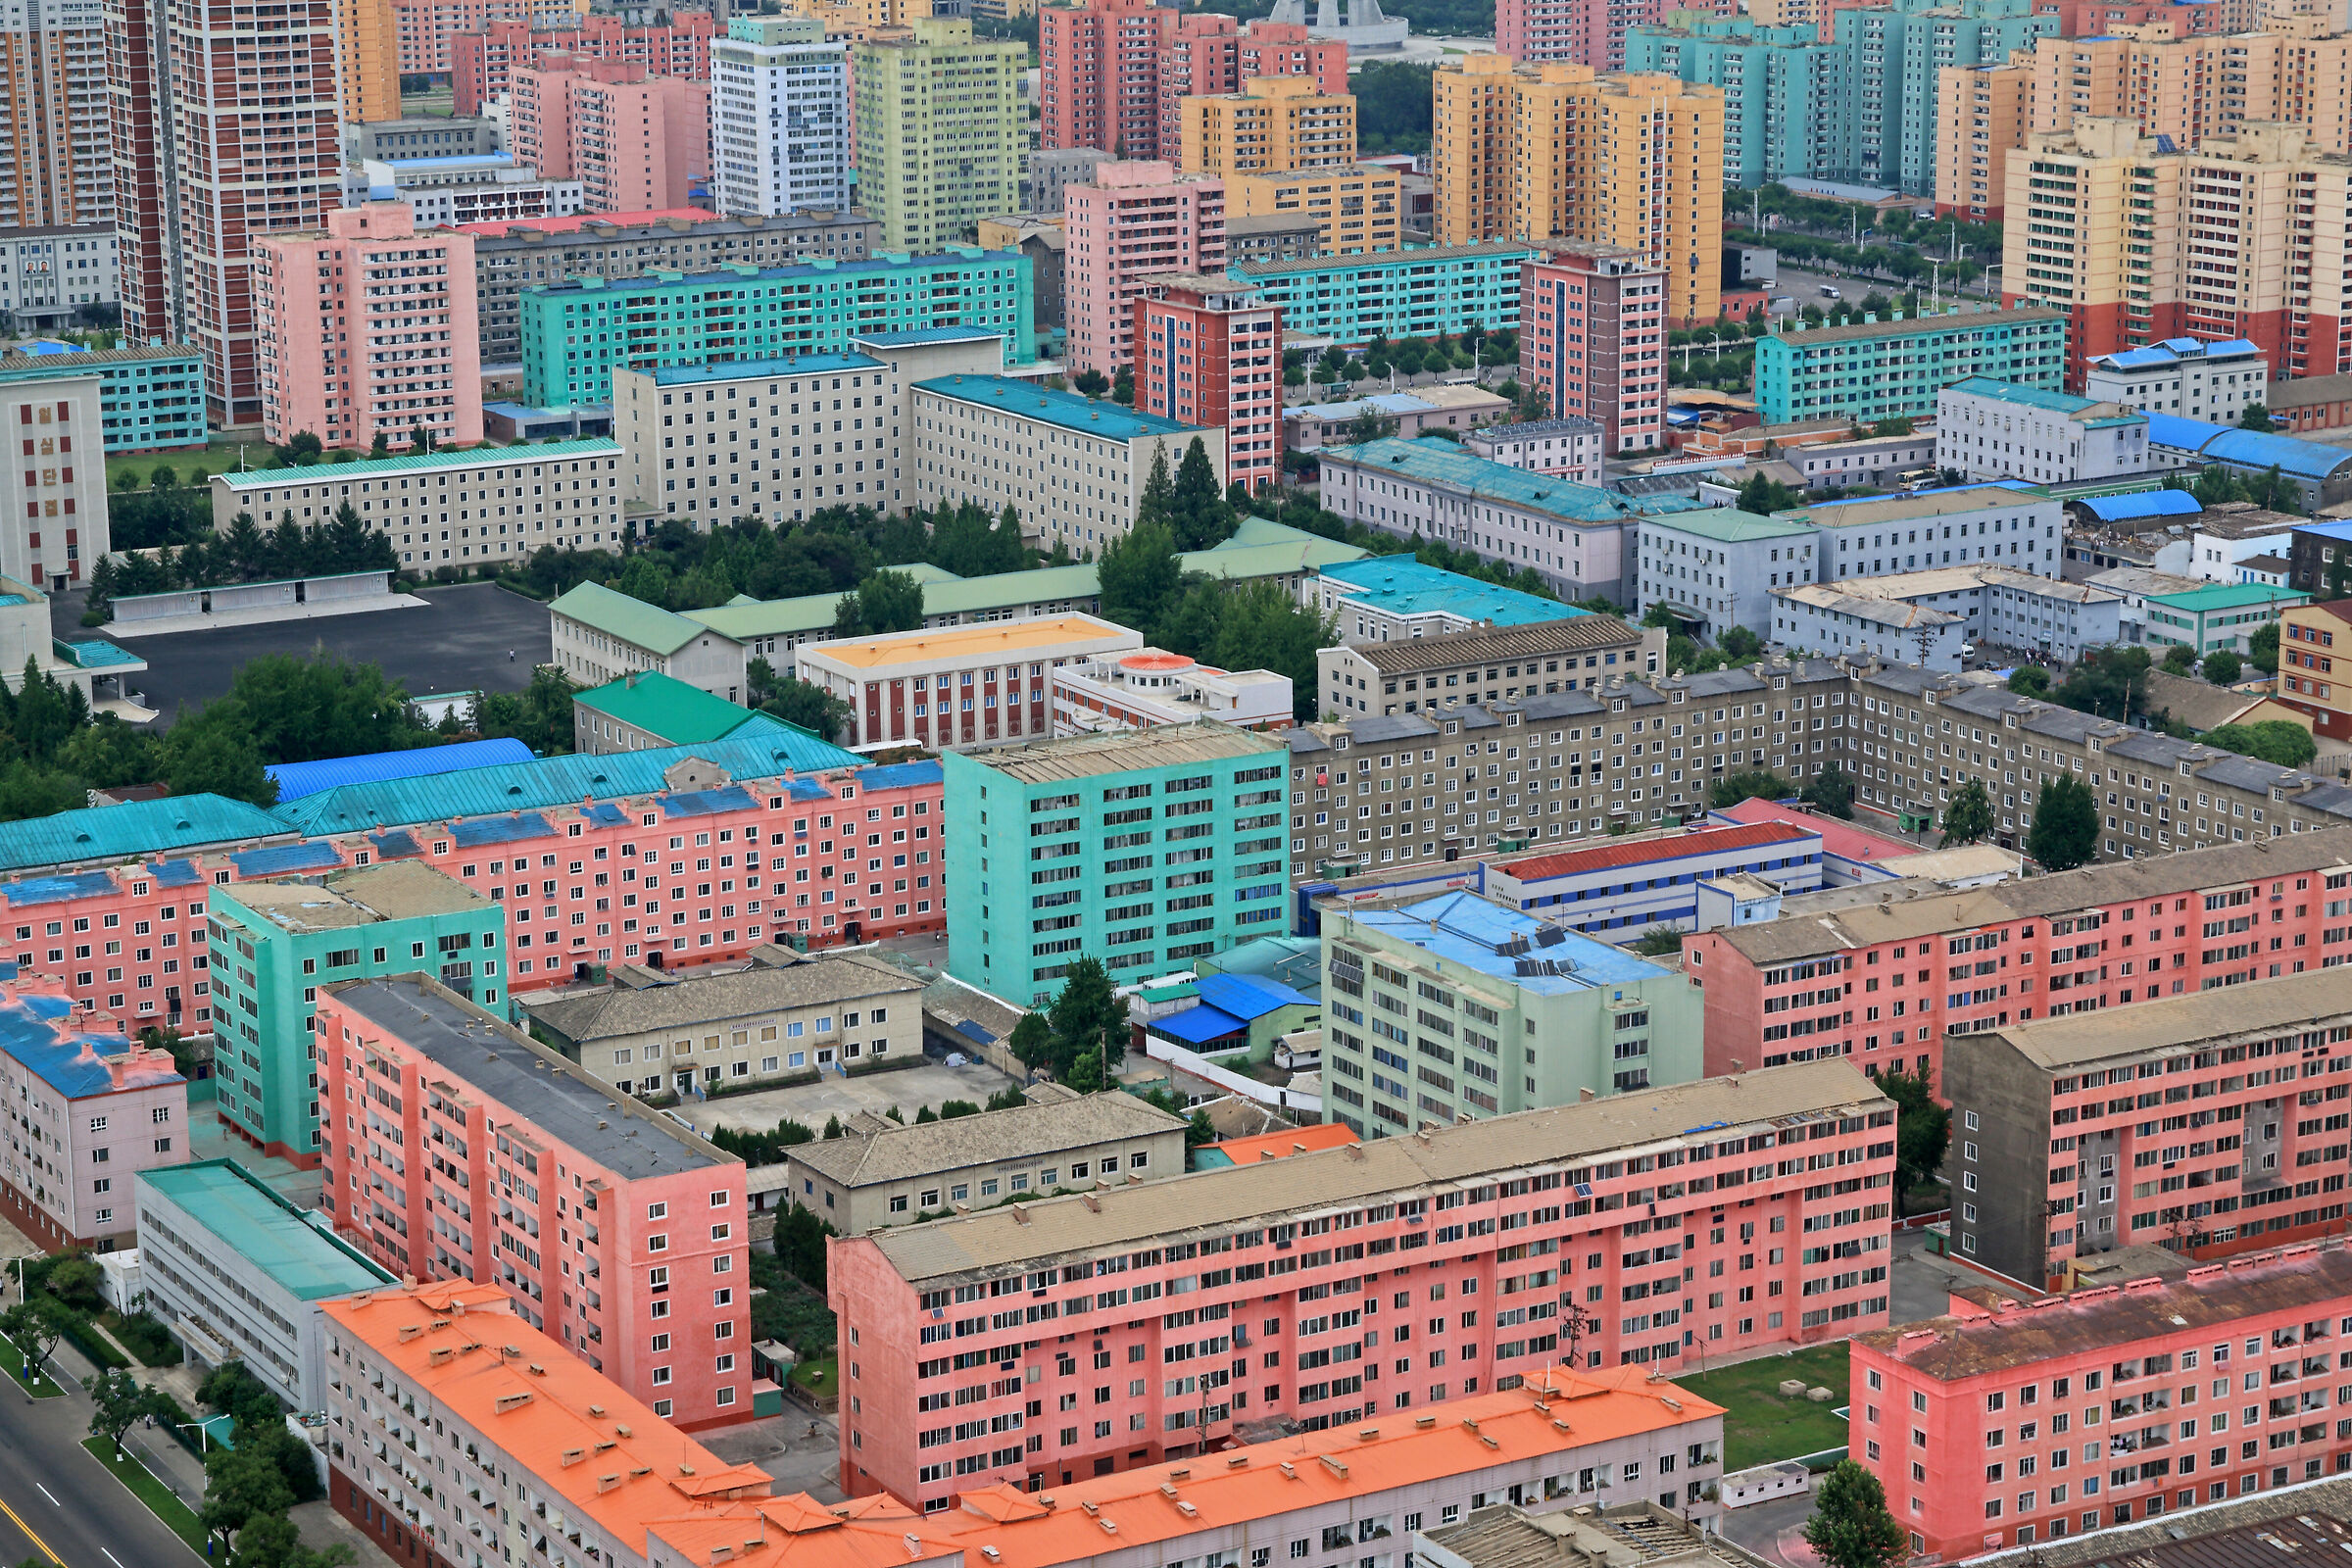 colours in pyongyang - north corea...